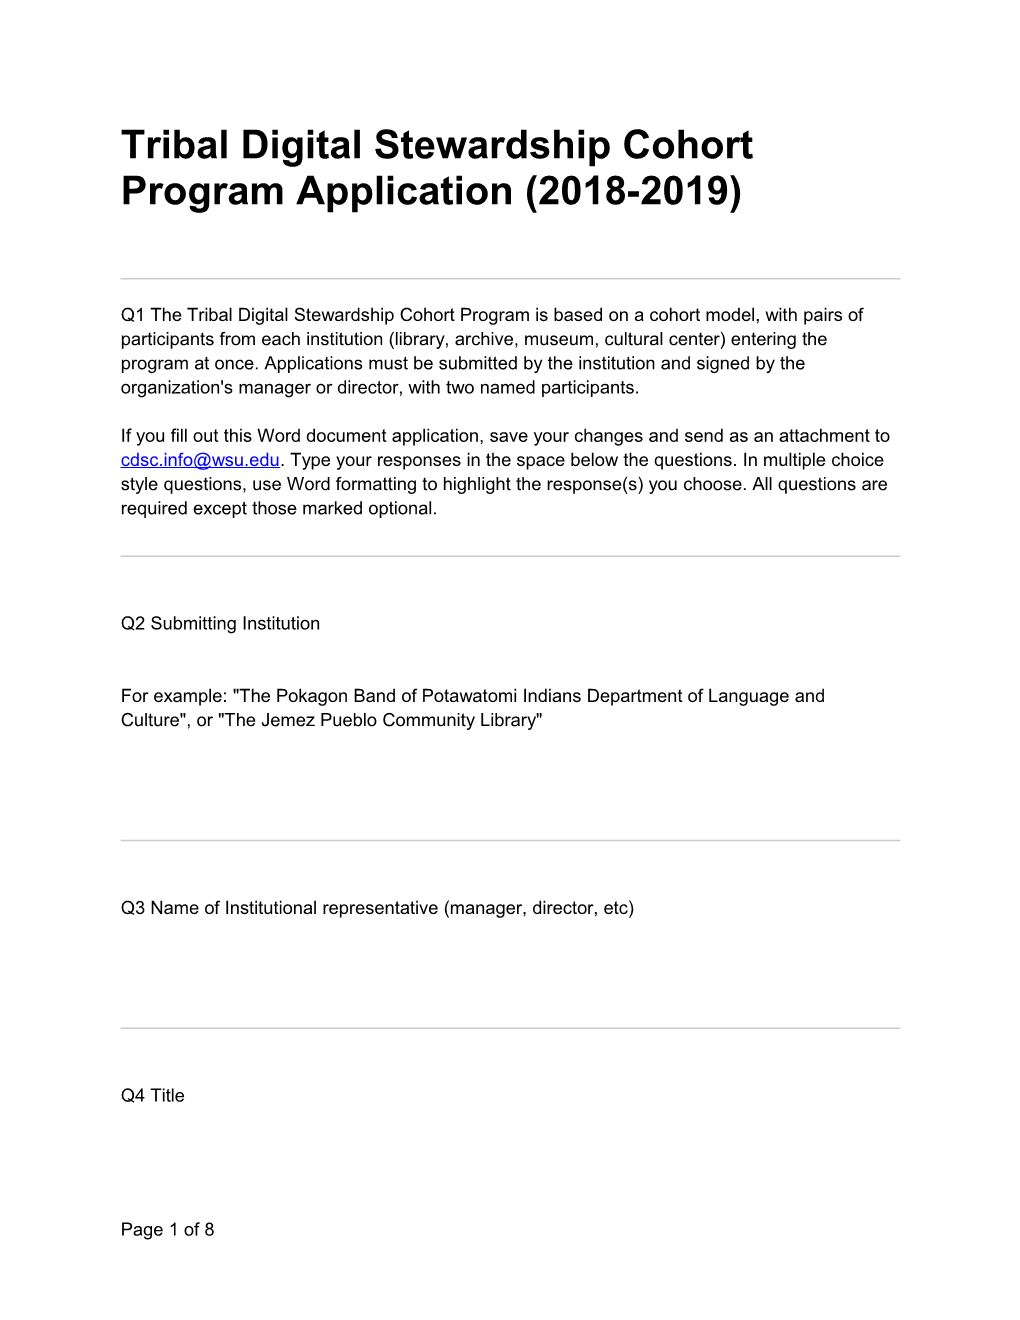 Tribal Digital Stewardship Cohort Program Application (2018-2019)